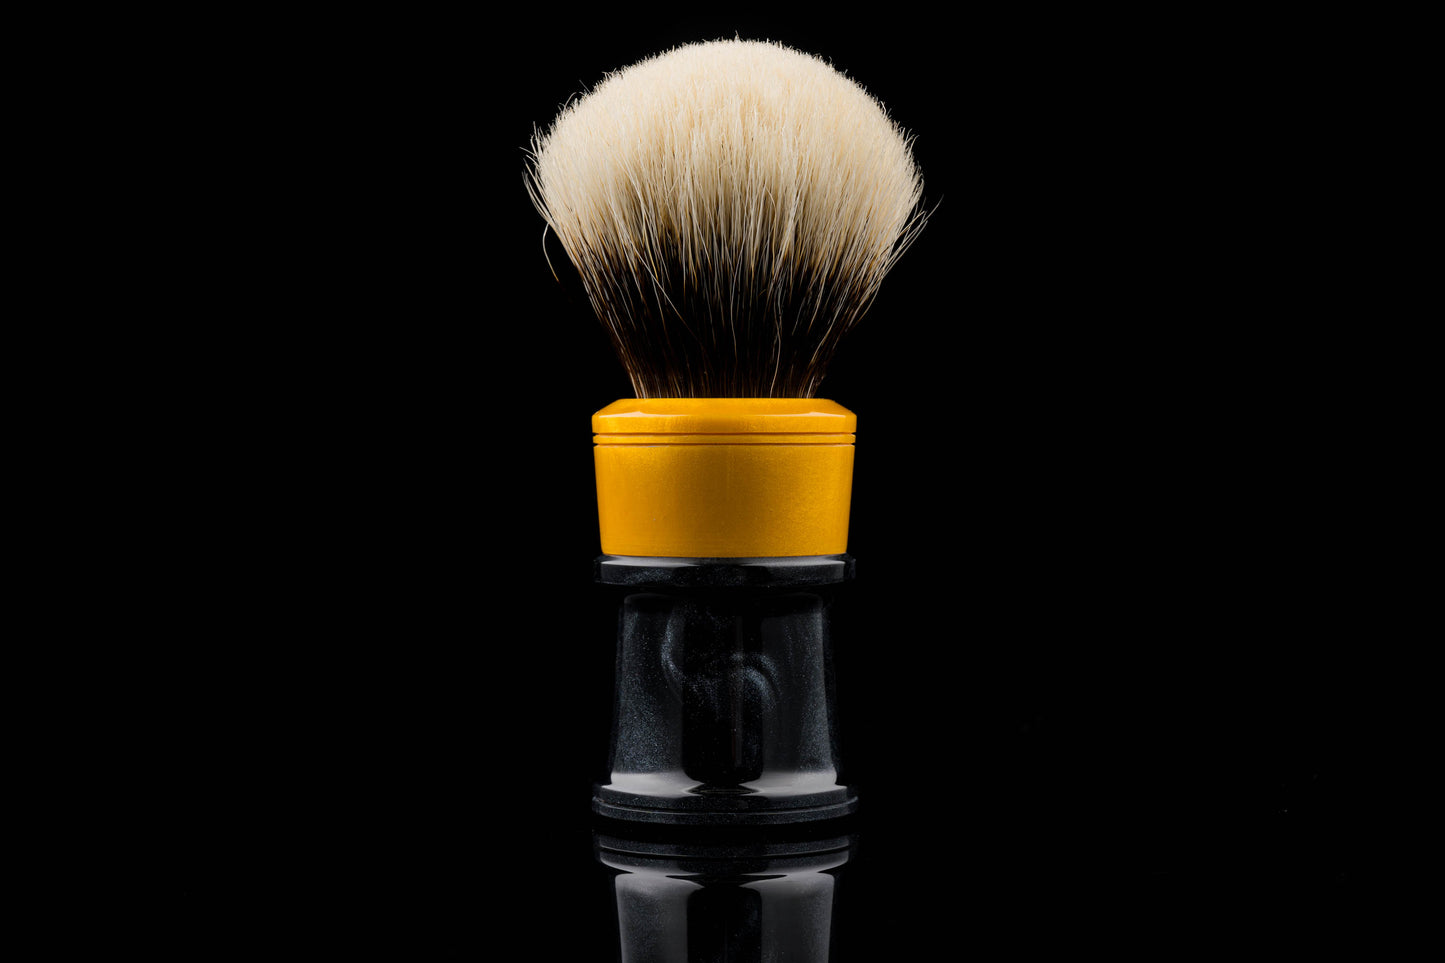 Fortress - ‘To youthl’ Resin Hybrid shaving brush handle